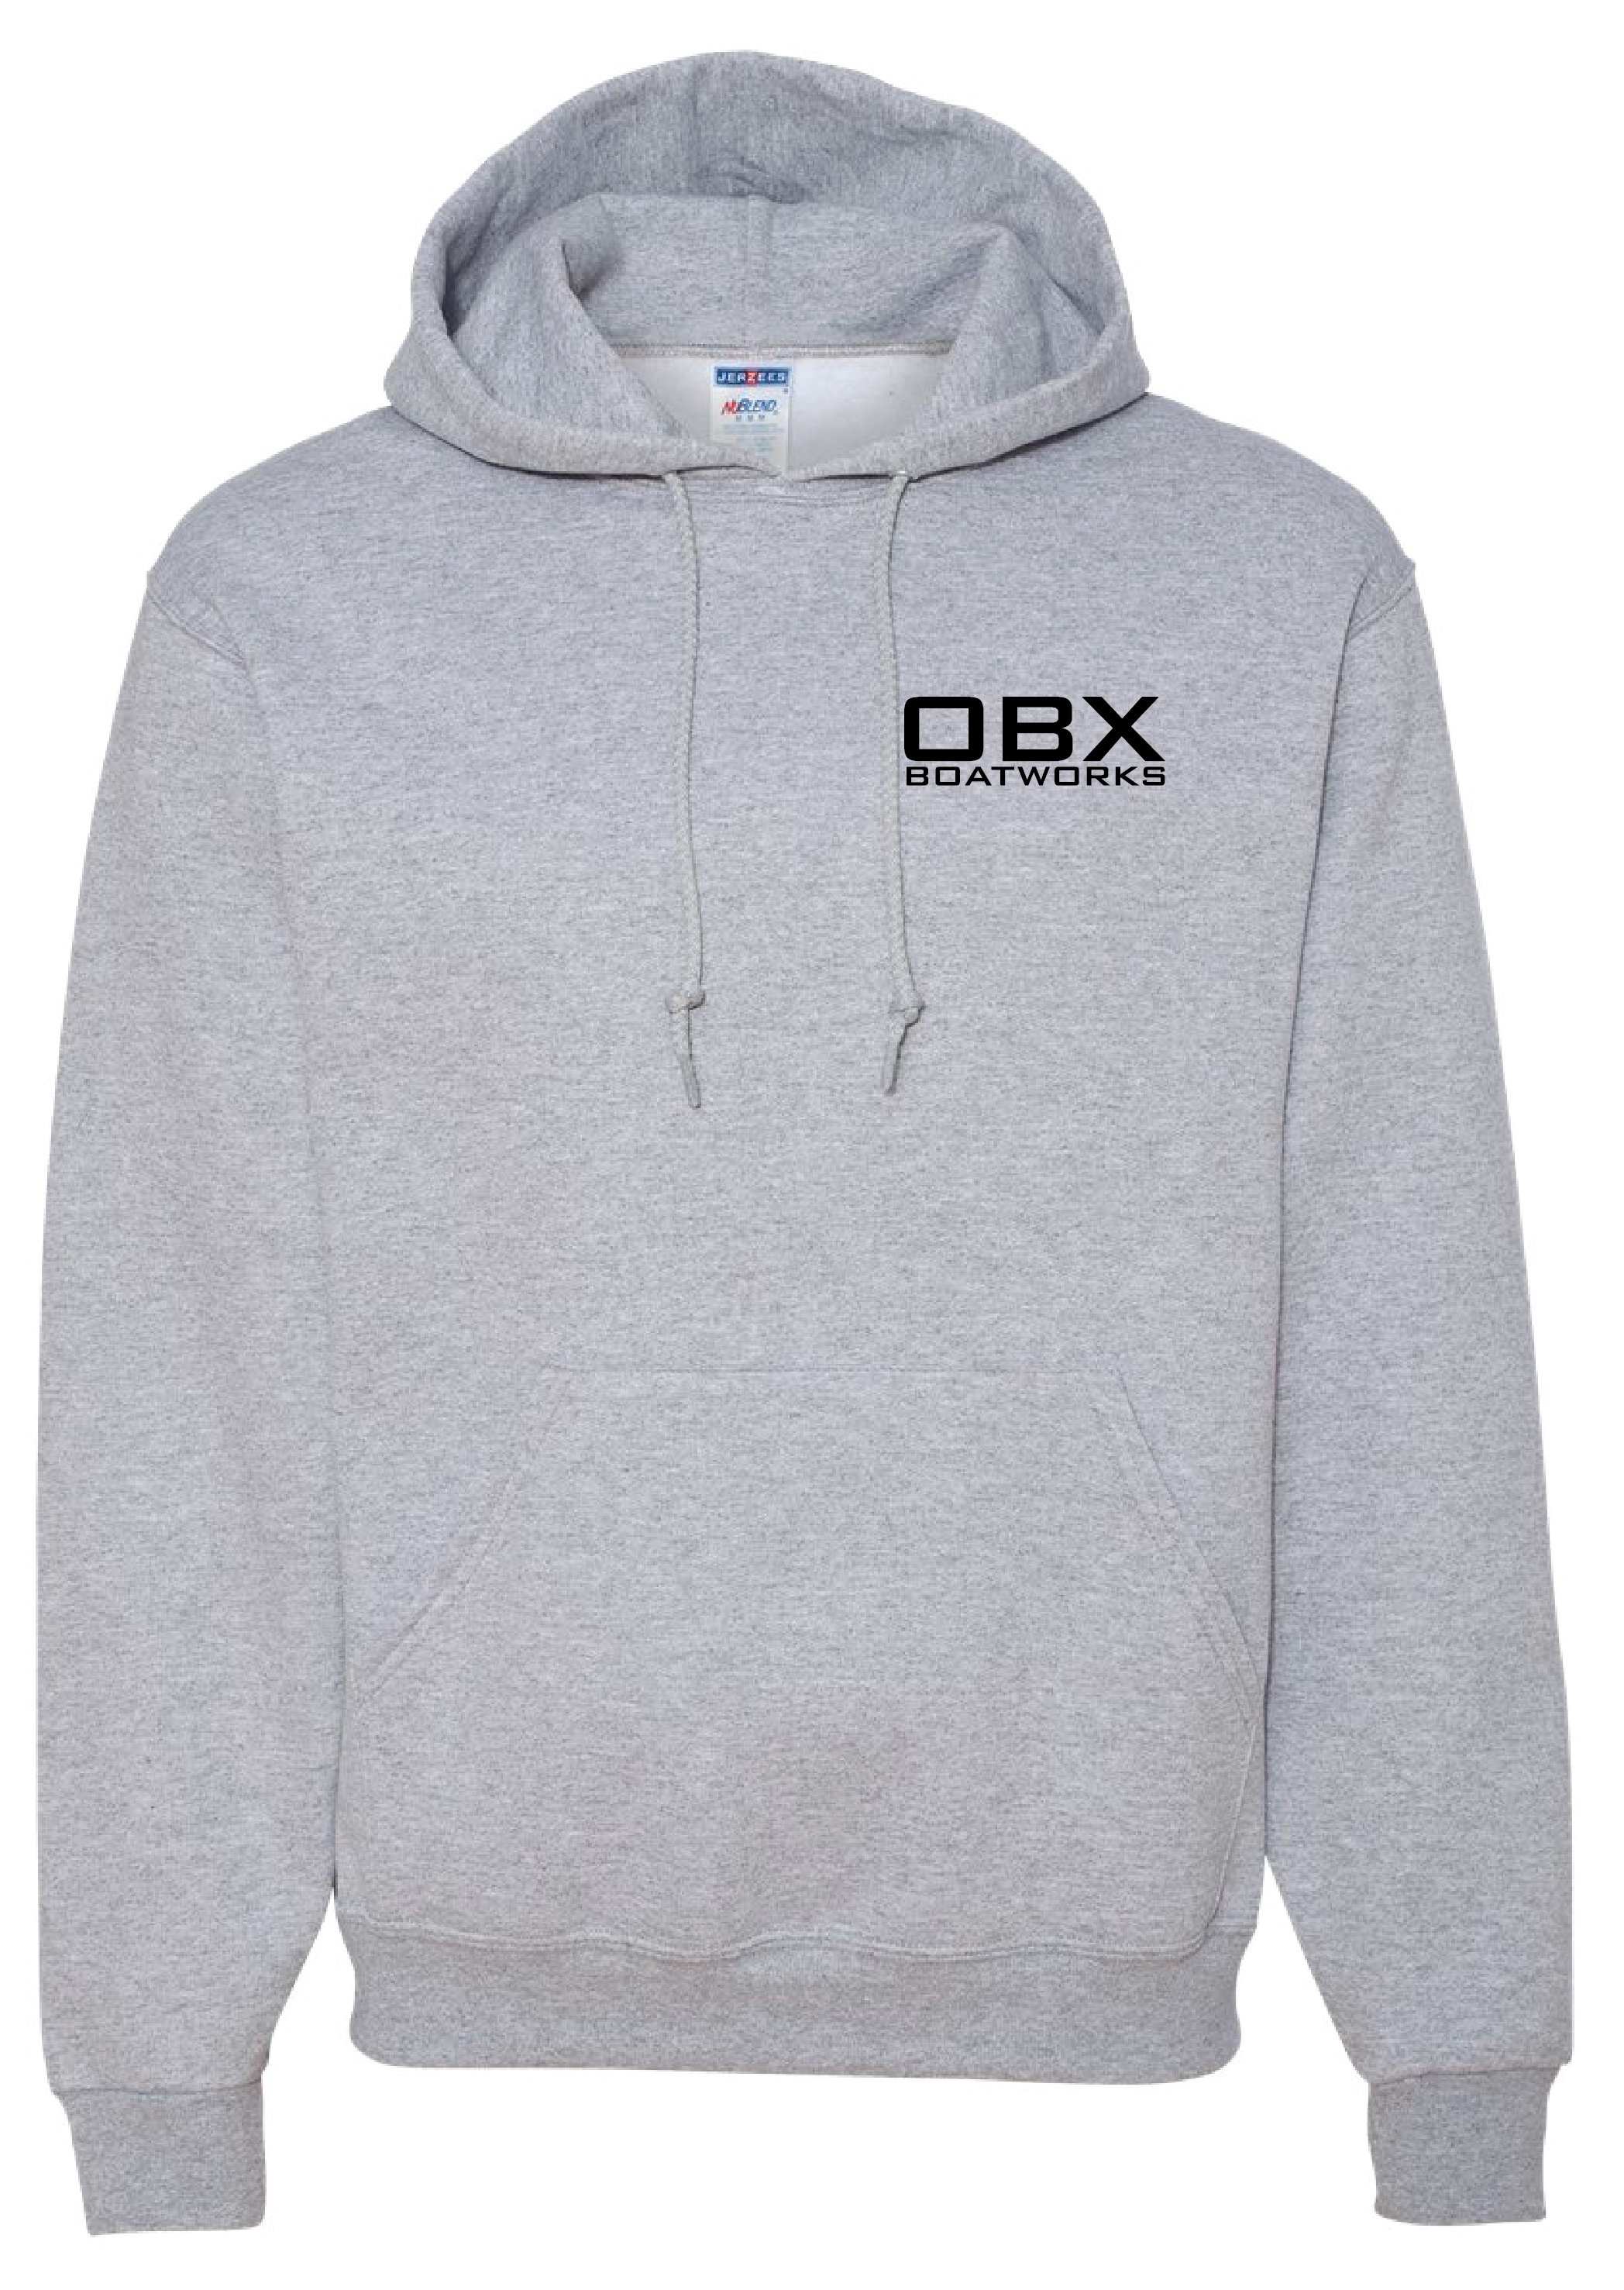 OBX Boatworks Sweatshirt Sailfish - Grey